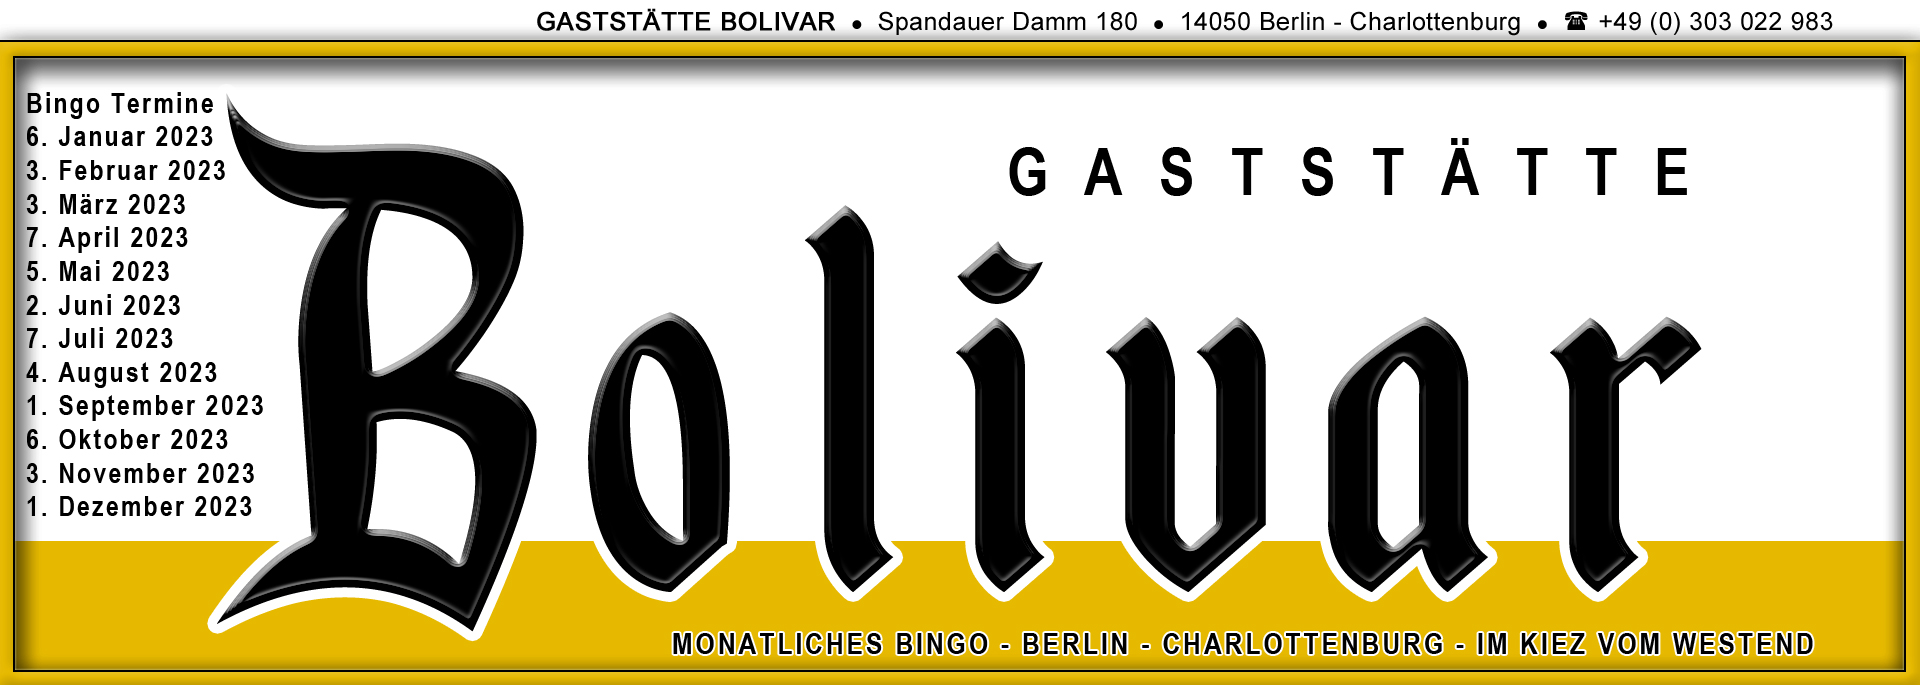 bolivar-berlin-charlottenburg-westend-bingo-2023